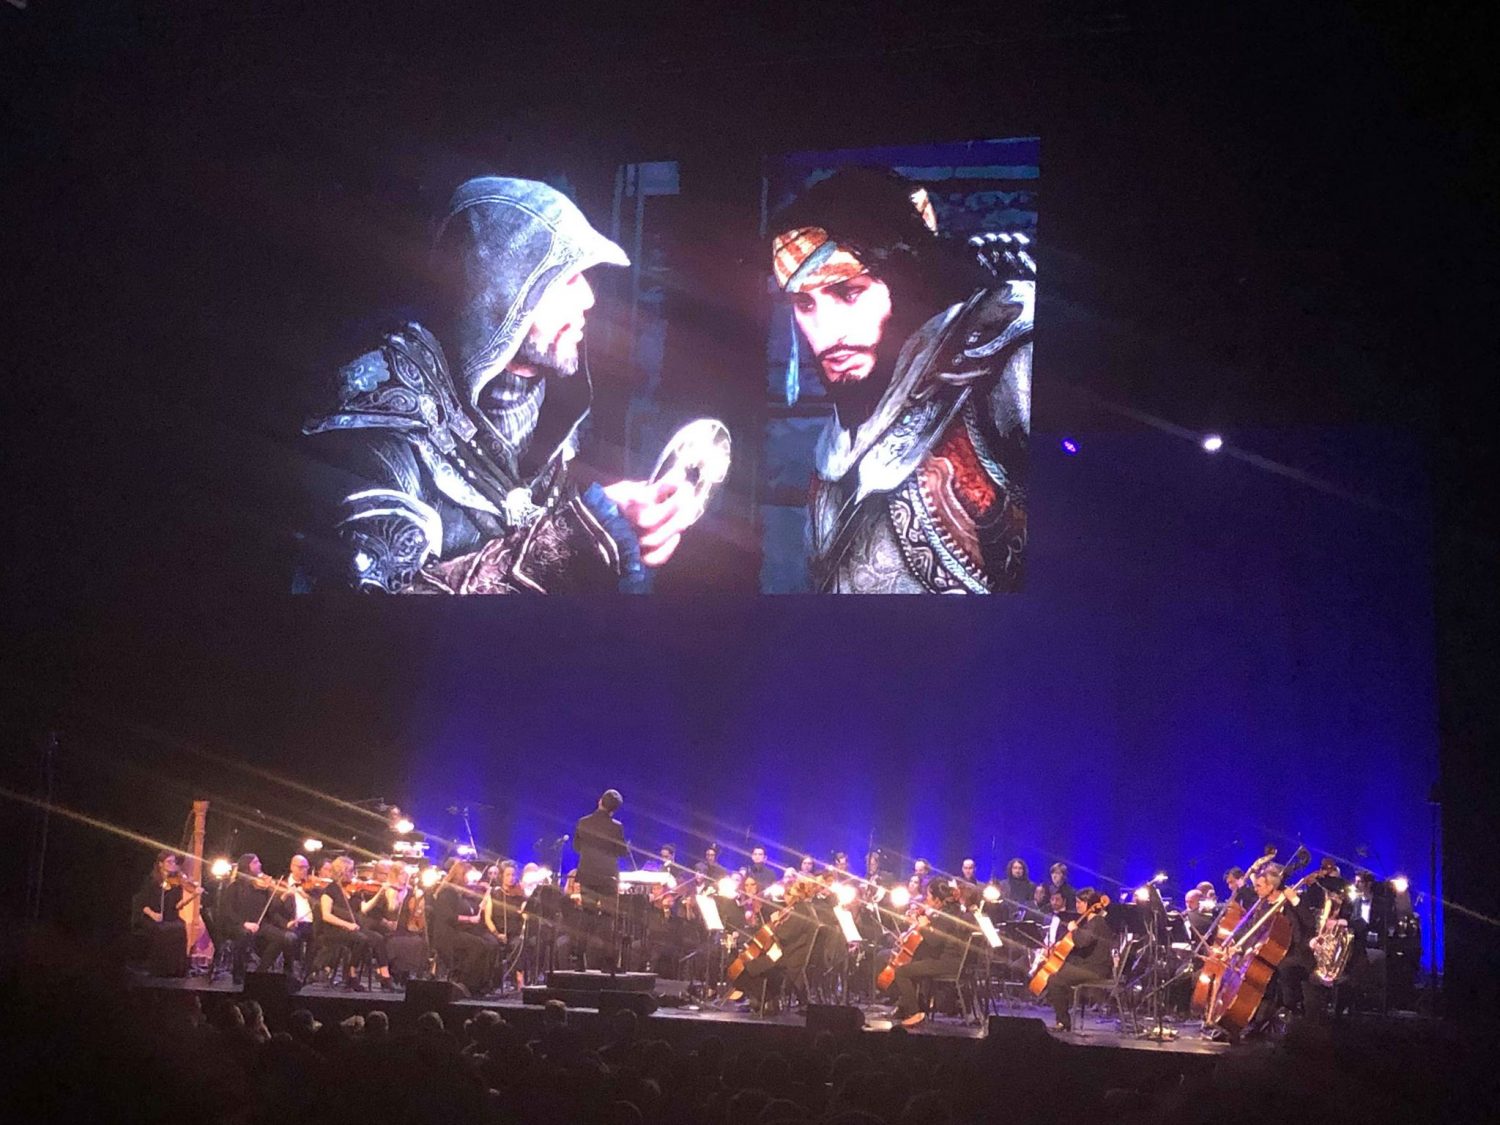 Assassin's Creed Symphony